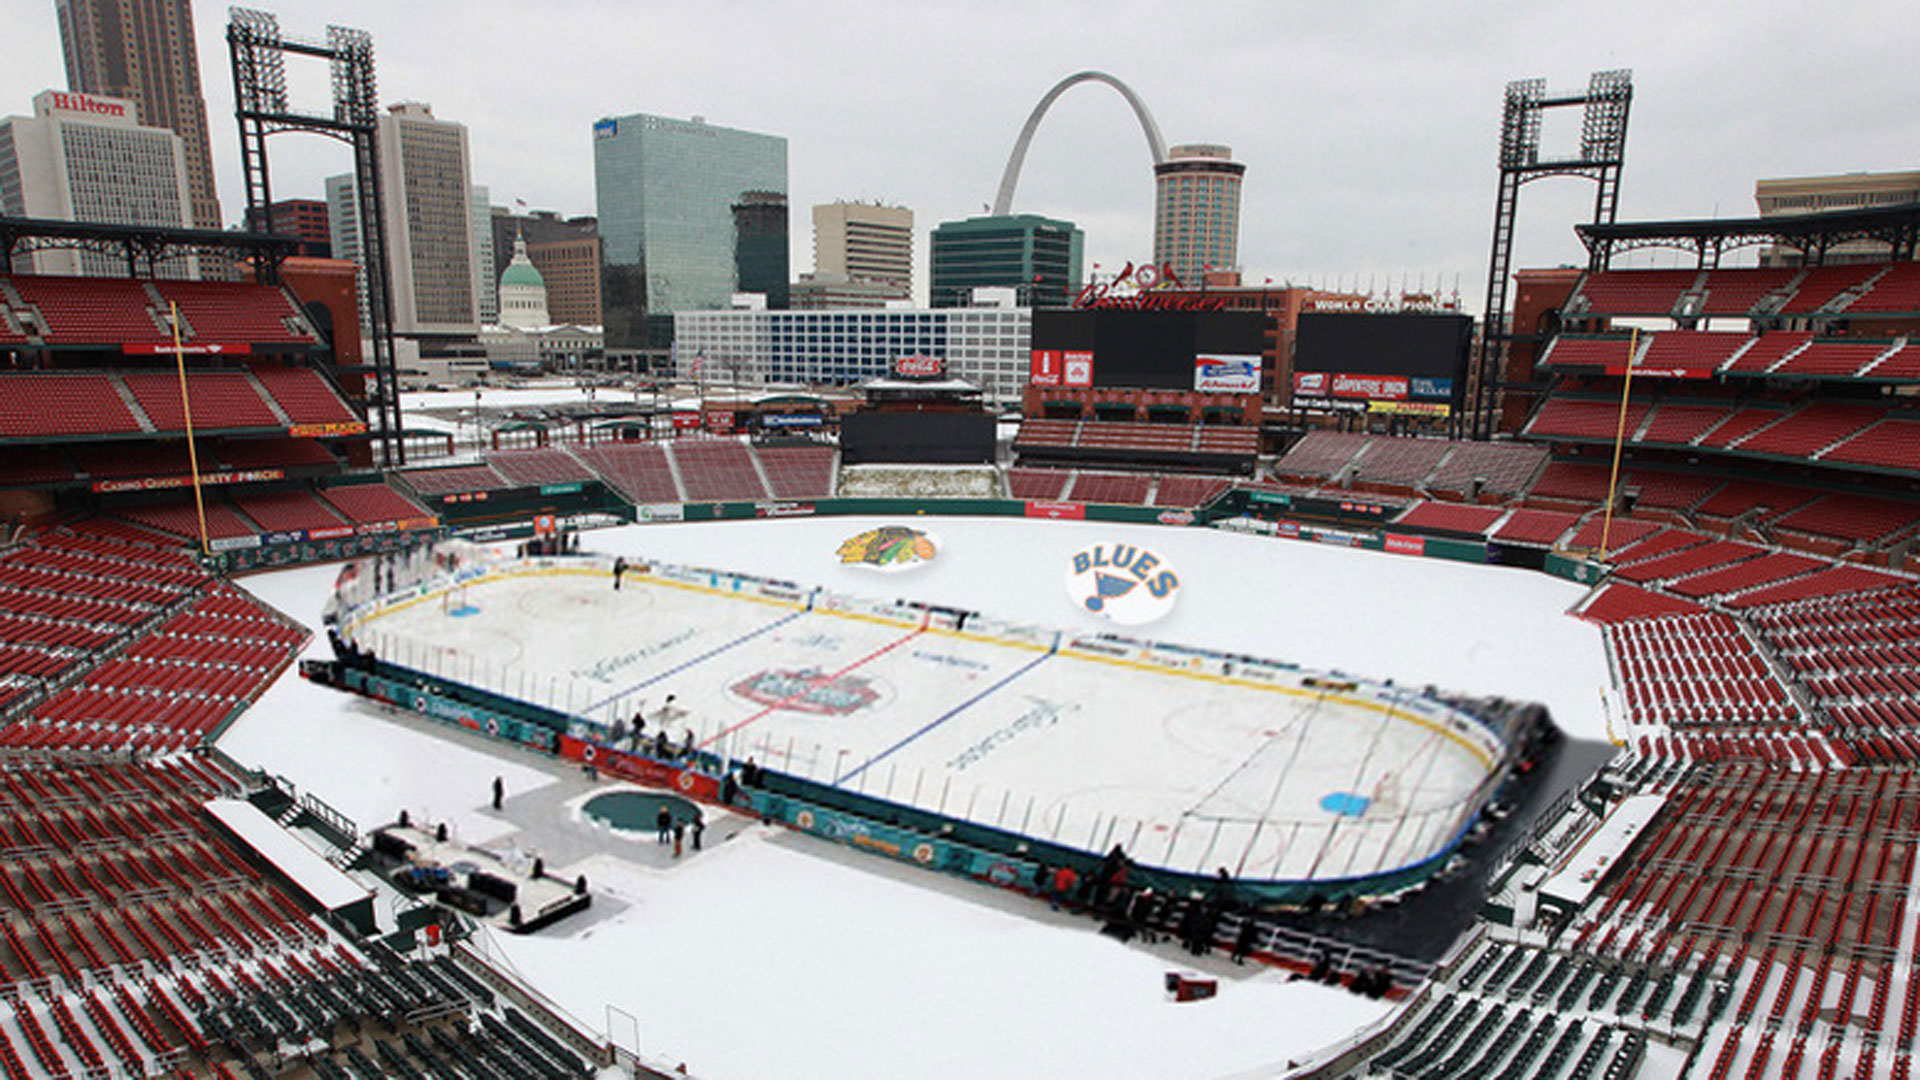 St. Louis Blues vs Chicago Blackhawks Winter Classic Alumni Game